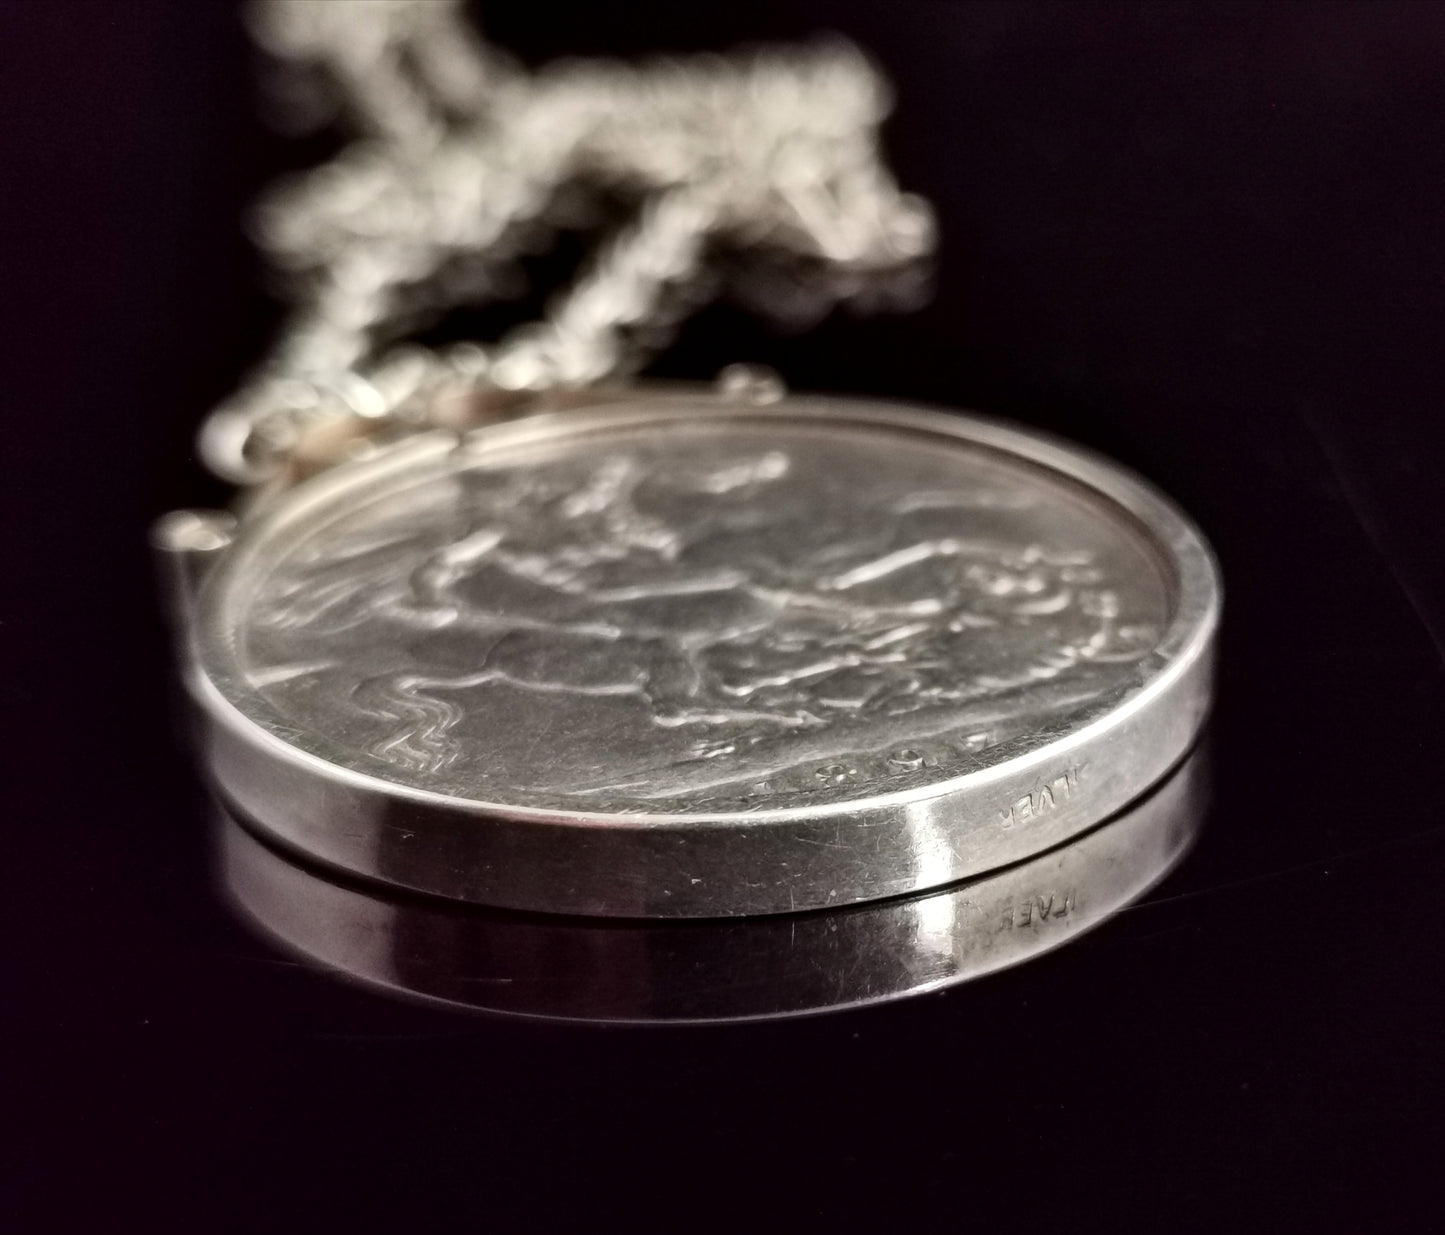 Antique Victorian silver coin pendant, necklace